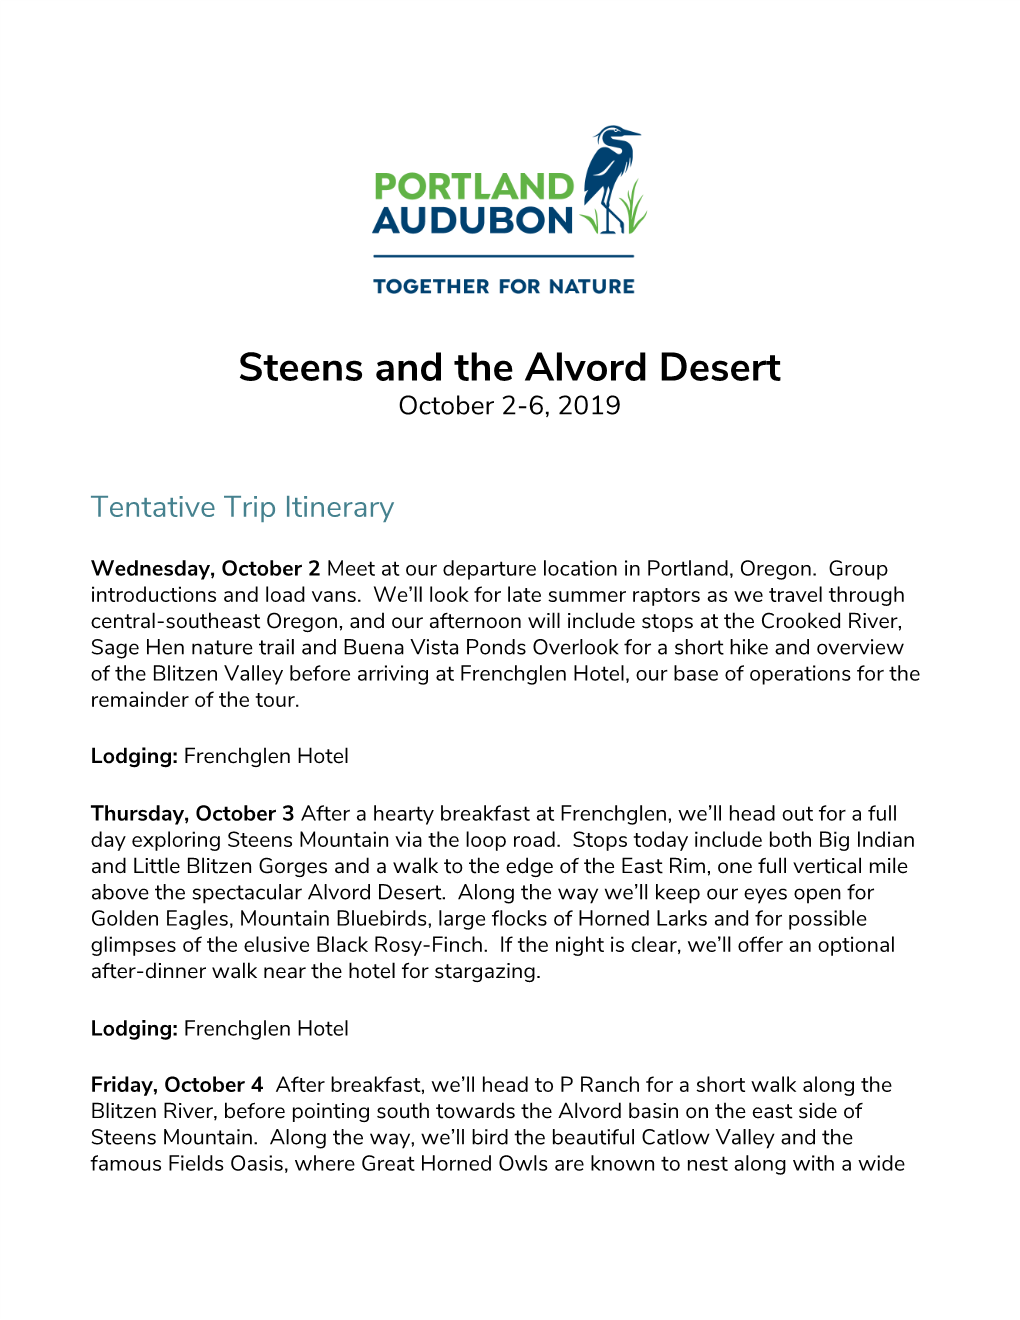 Steens and the Alvord Desert October 2-6, 2019